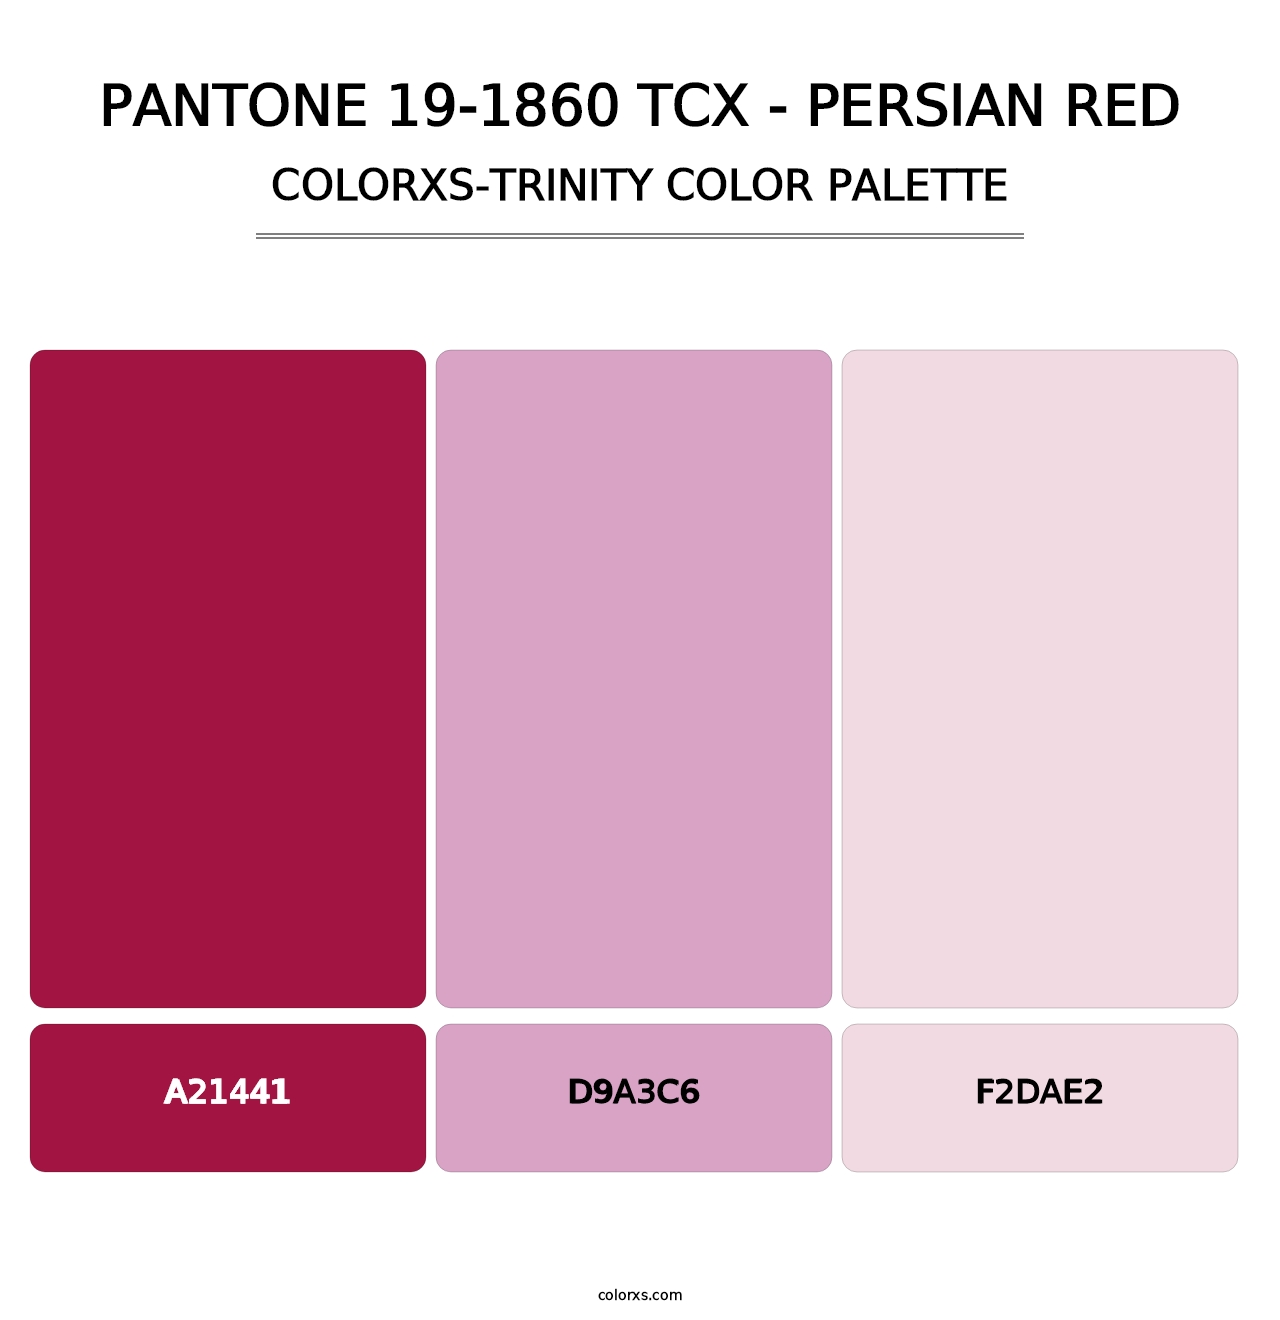 PANTONE 19-1860 TCX - Persian Red - Colorxs Trinity Palette